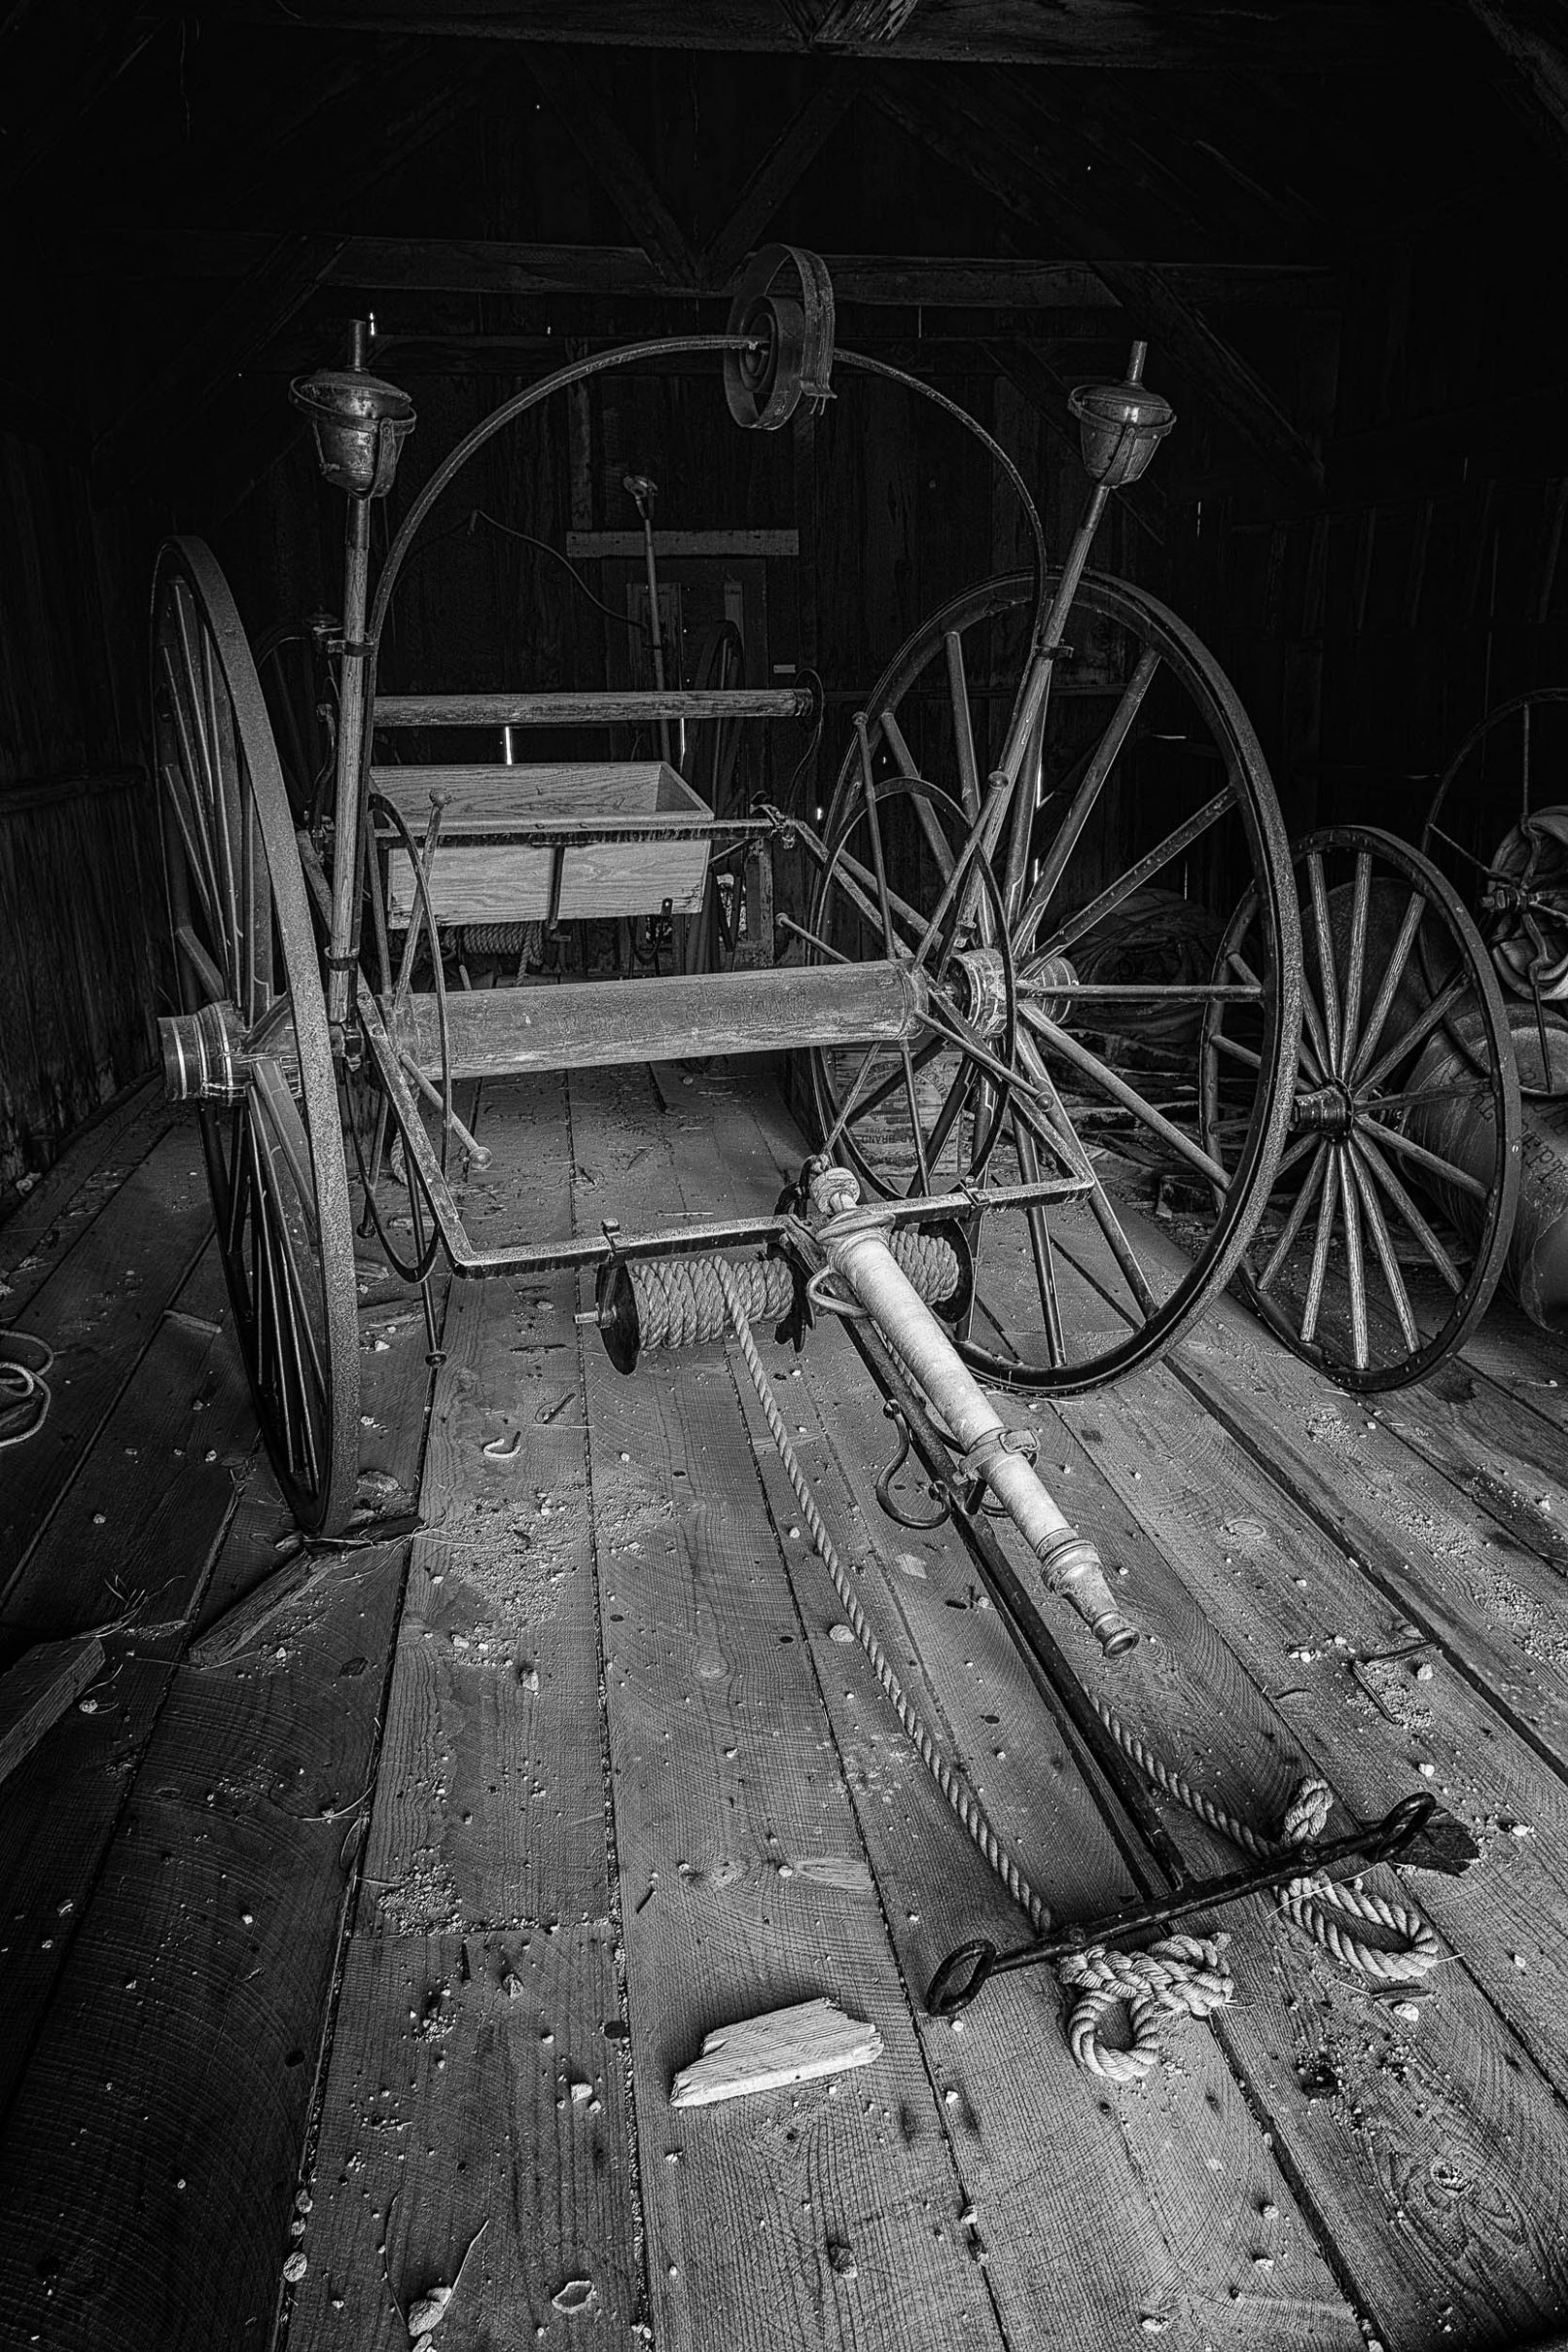 Old farm equipment in Bodi, California ghost town